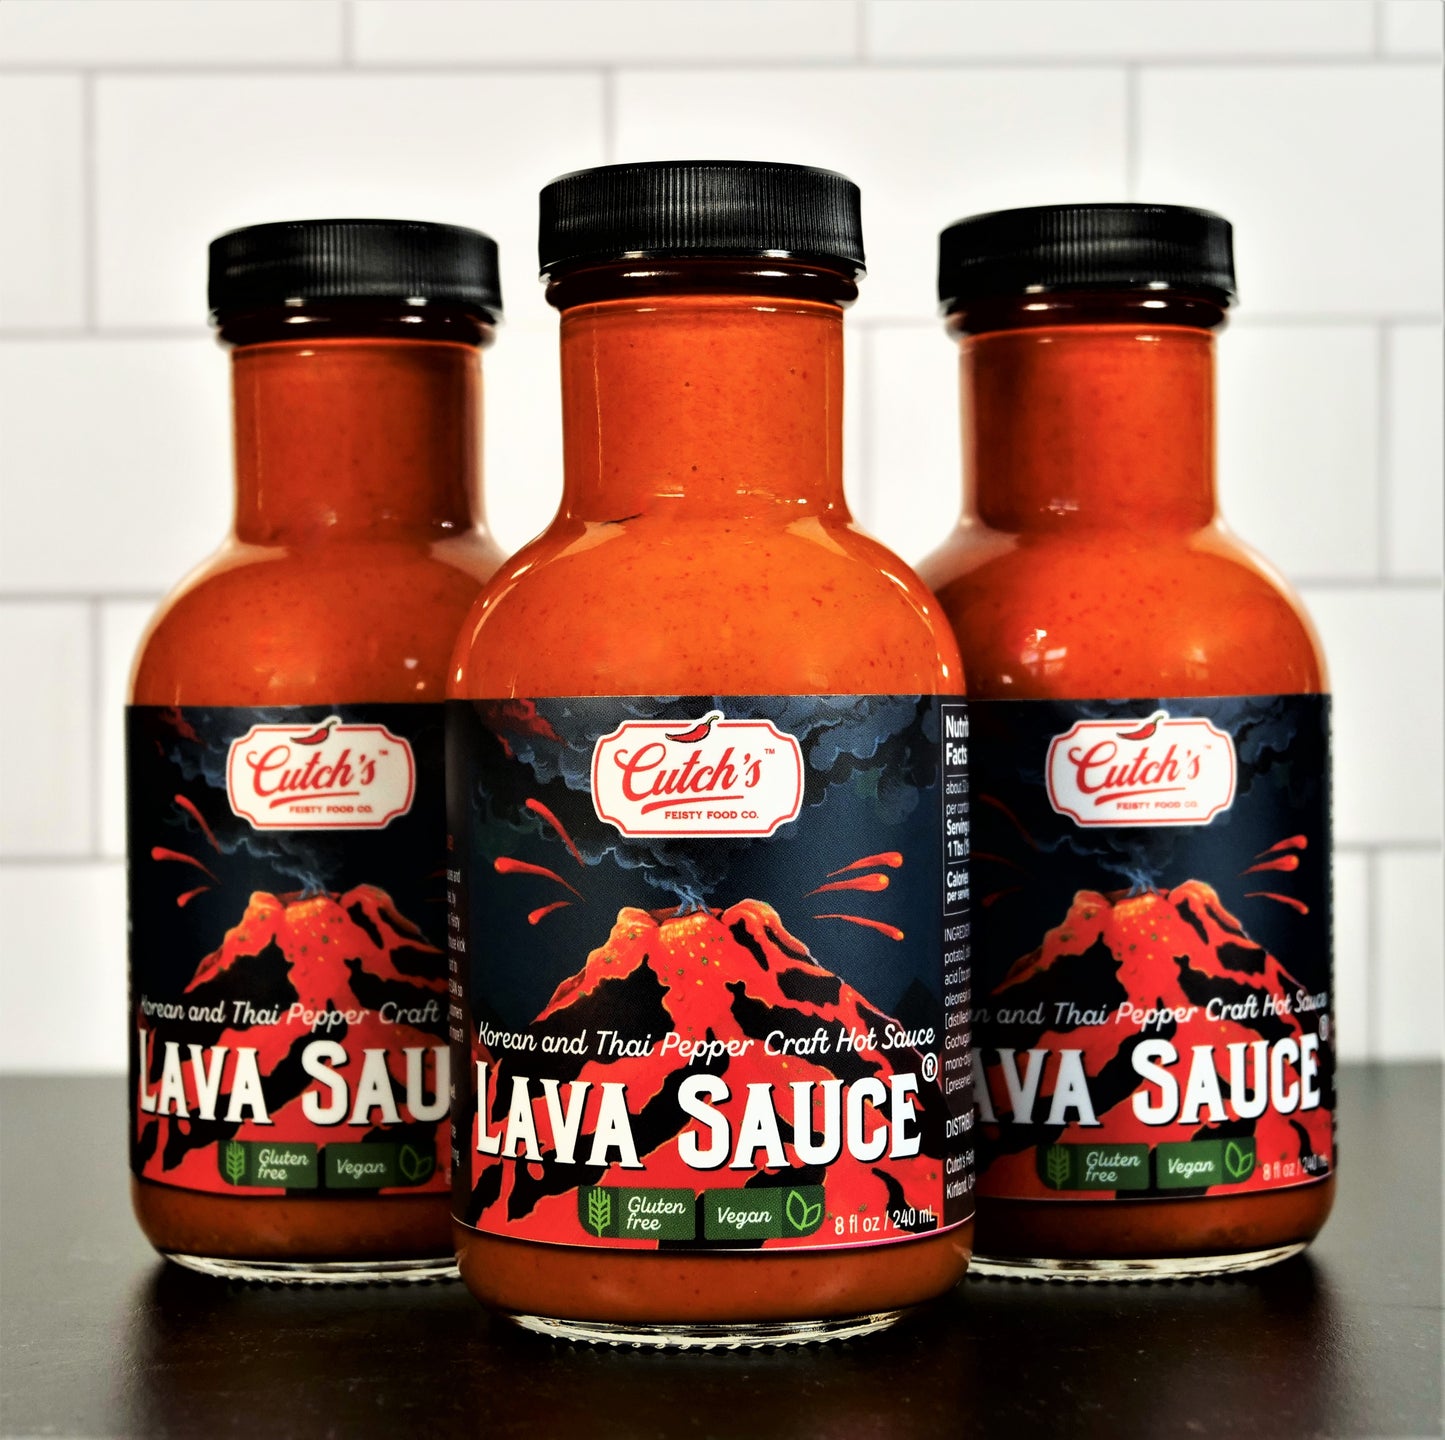 Cutch's Lava Sauce